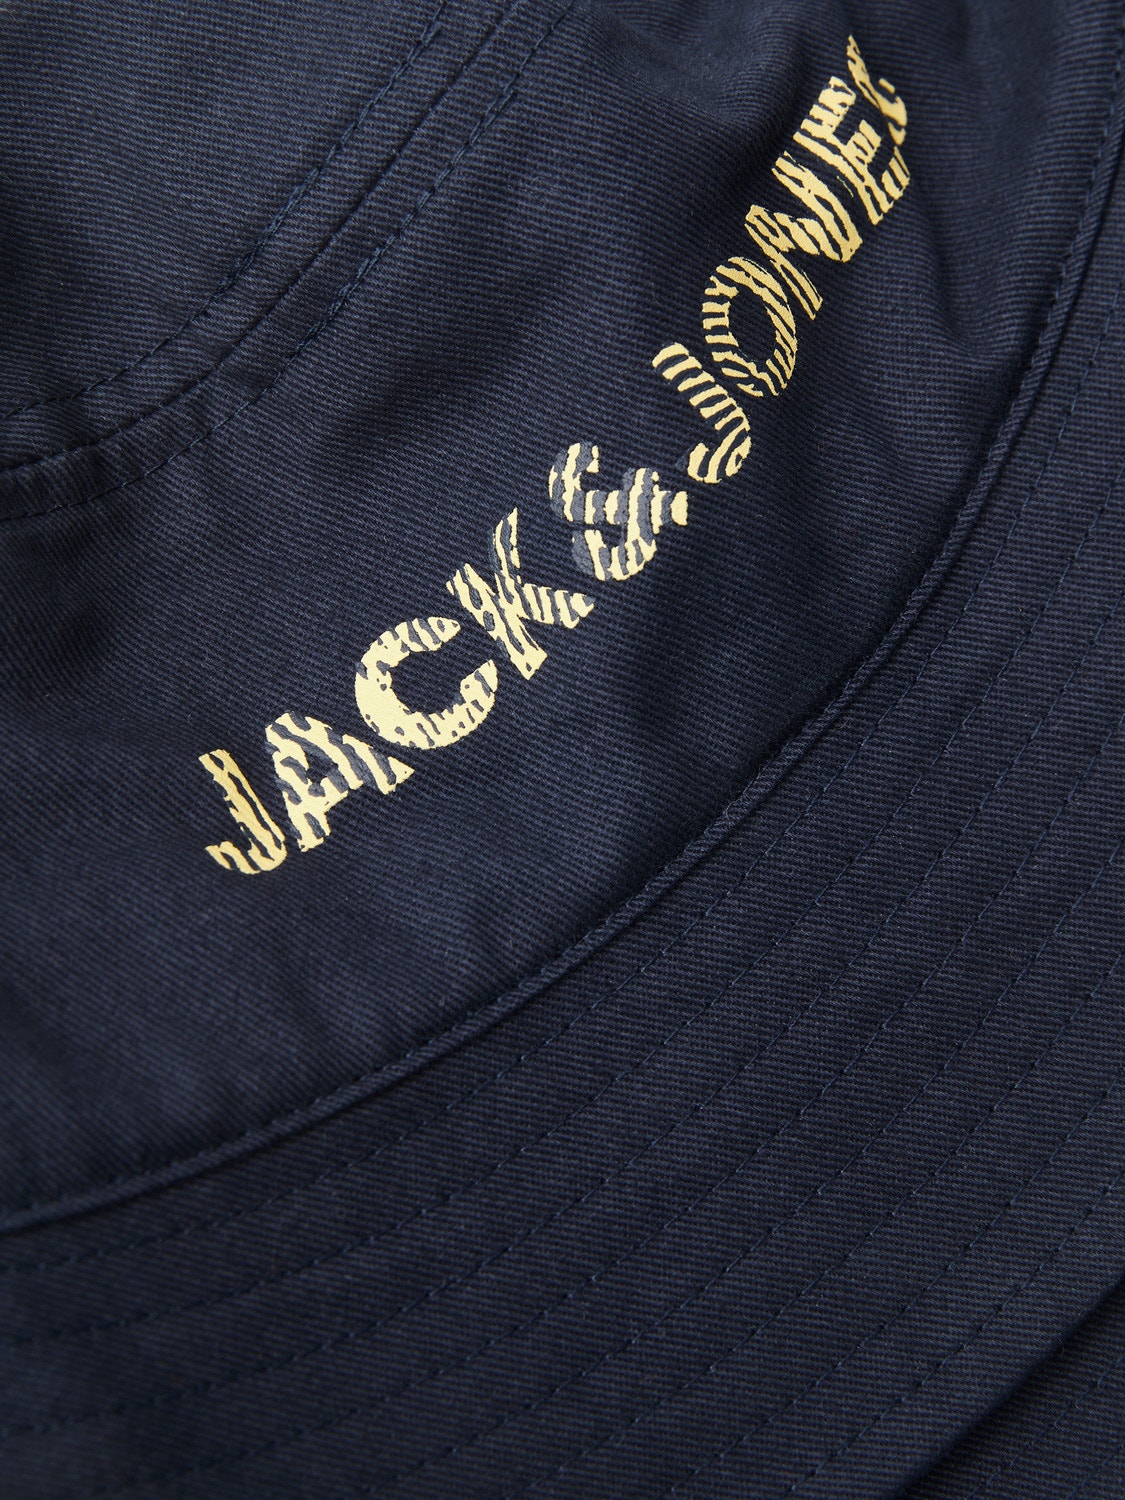 Jack & Jones Fischerhut -Navy Blazer - 12235410